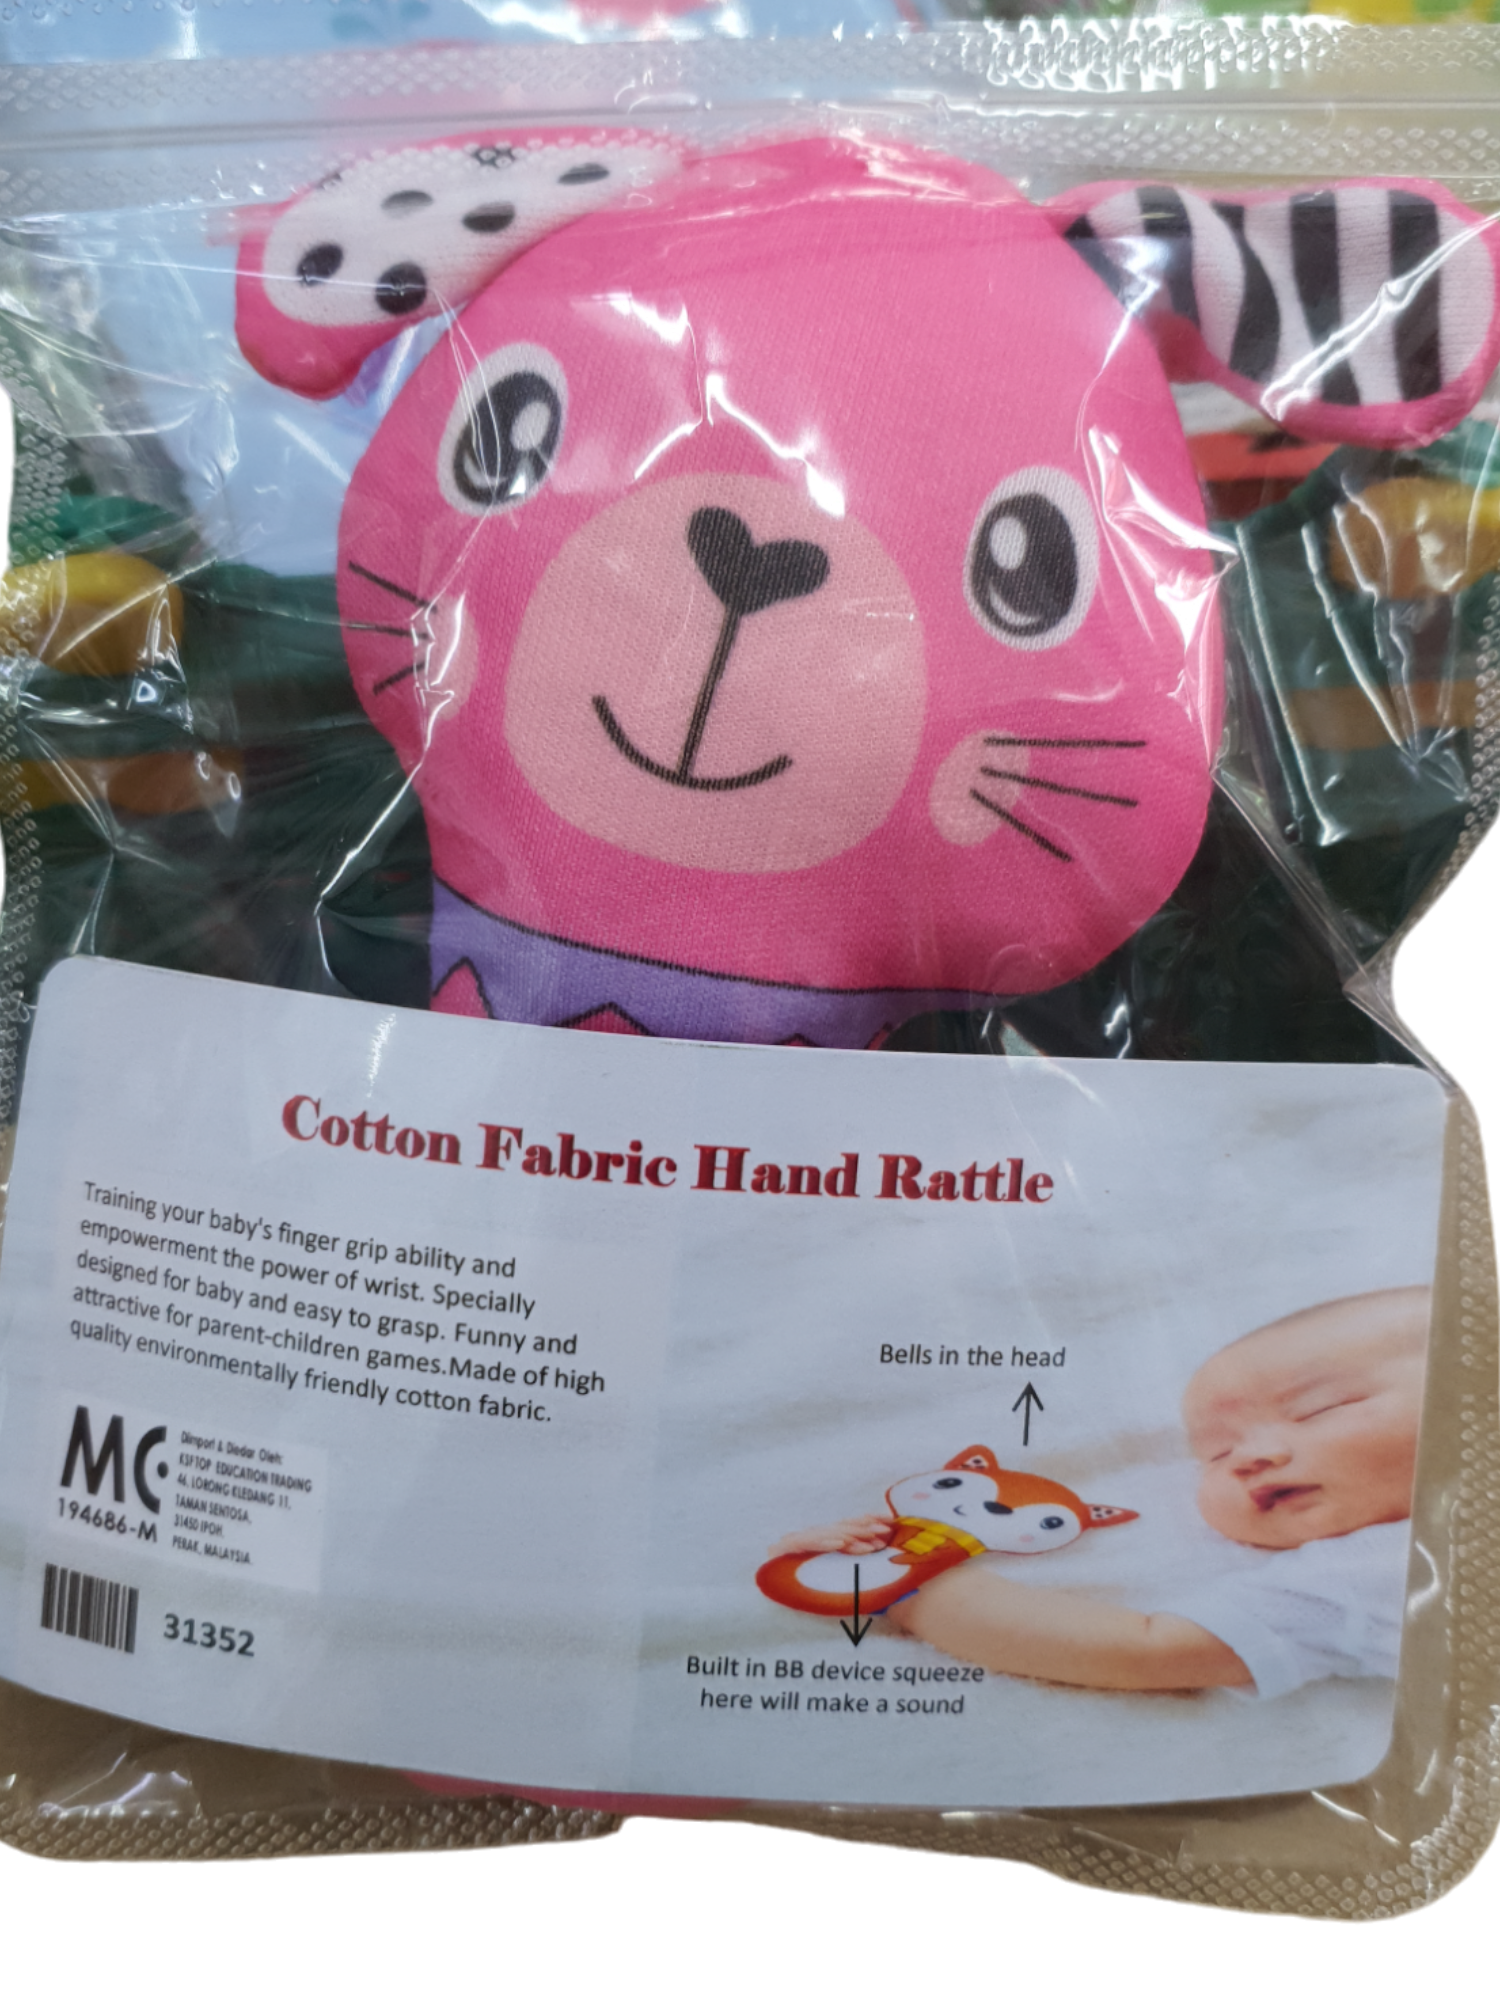 Cotton Fabric Hand Rattle